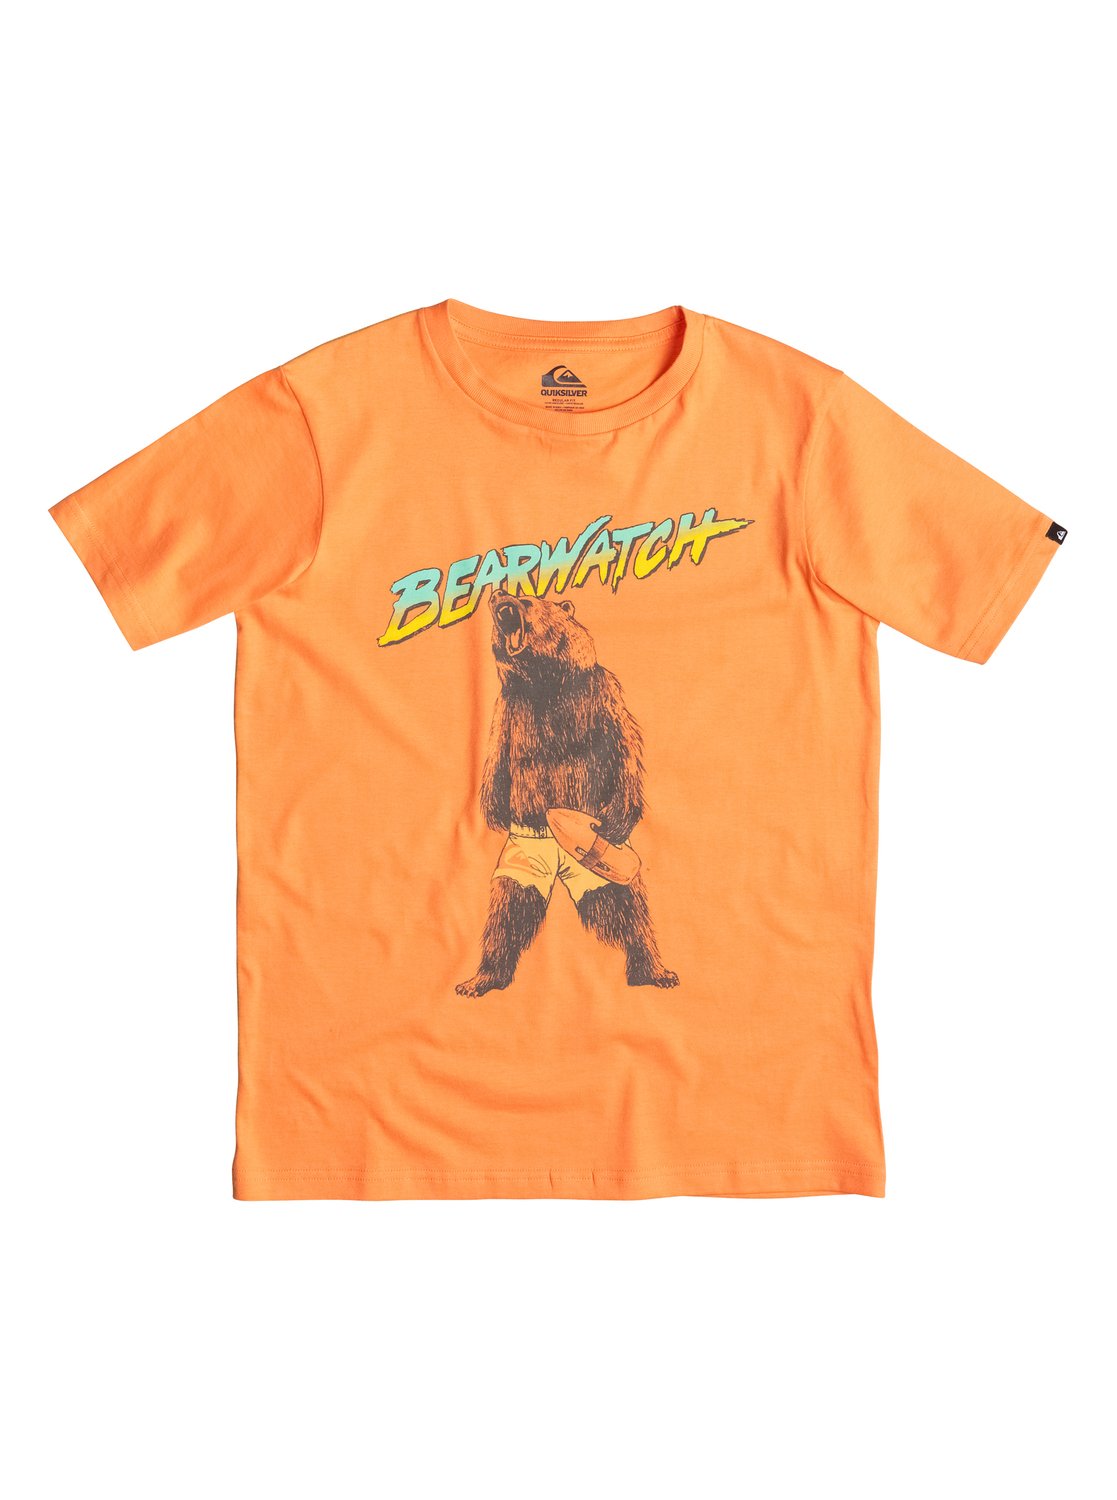 Classic Bearwatch - T-Shirt - Quiksilver<br>